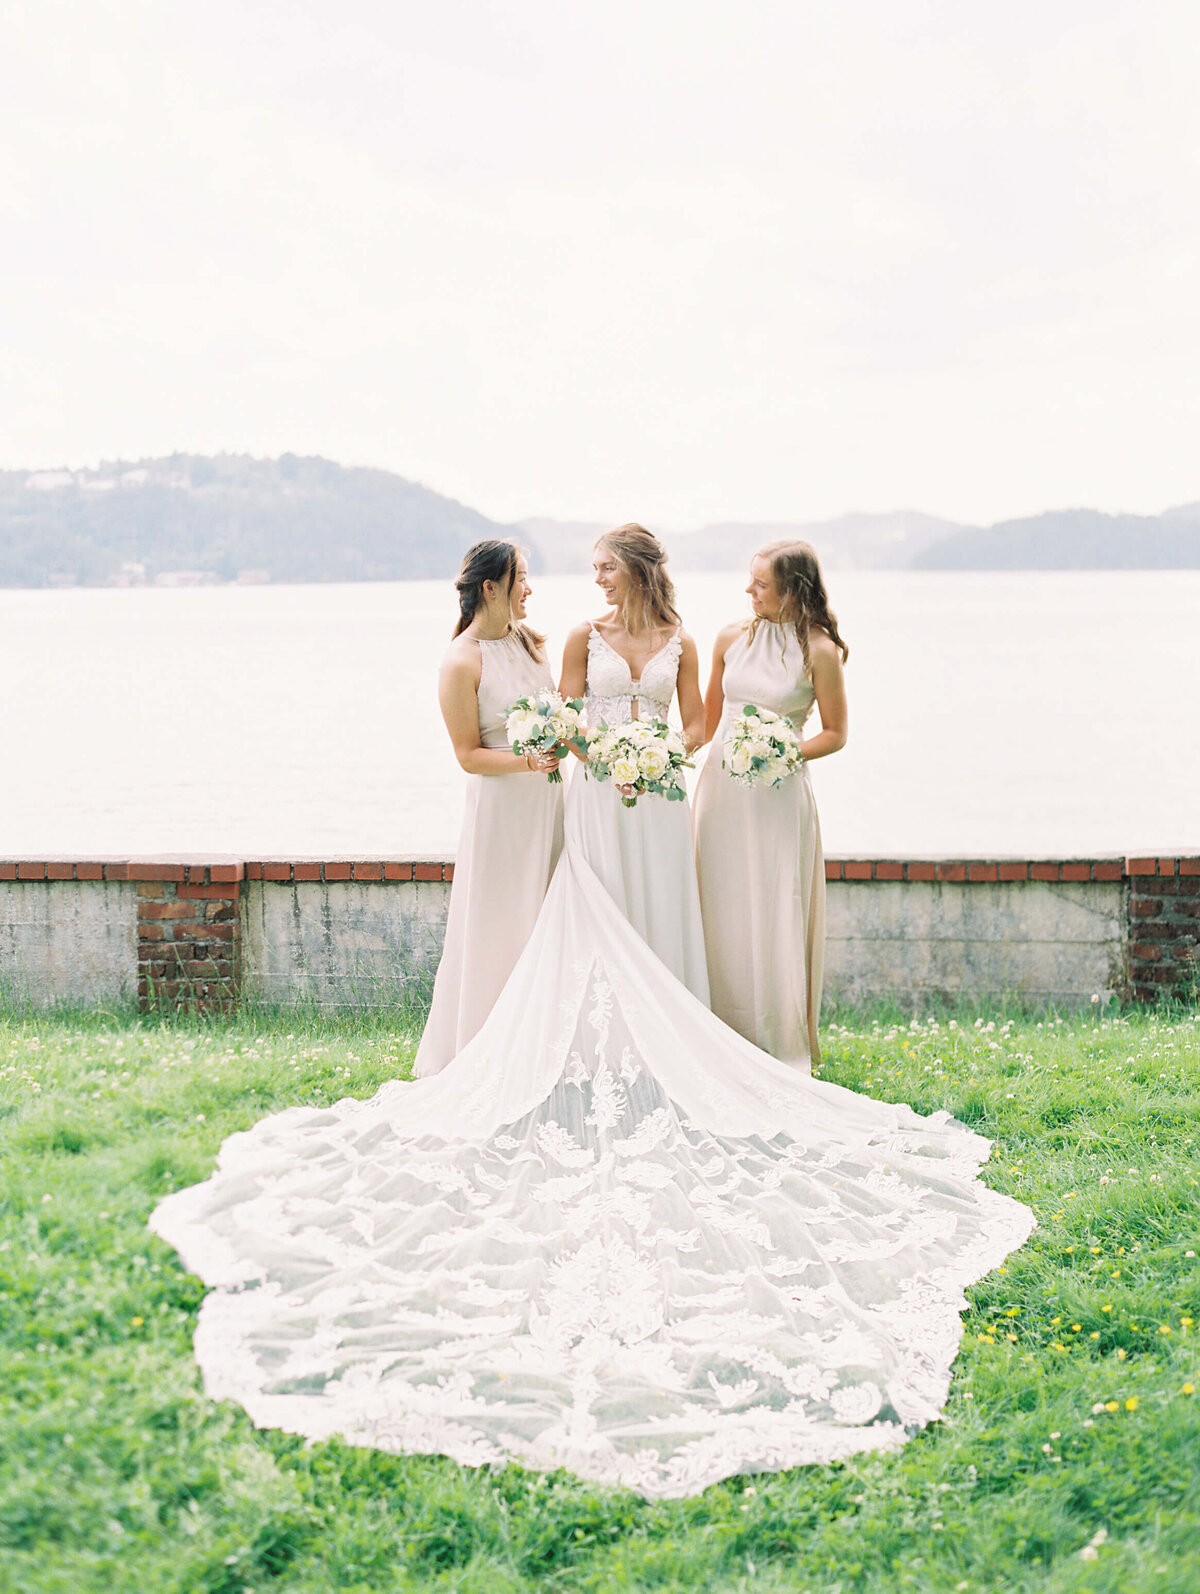 Lisa-Leanne-Photography_Bergen-Norway-Wedding_International-Wedding-Photographer_Destination-Wedding-Photographer_23